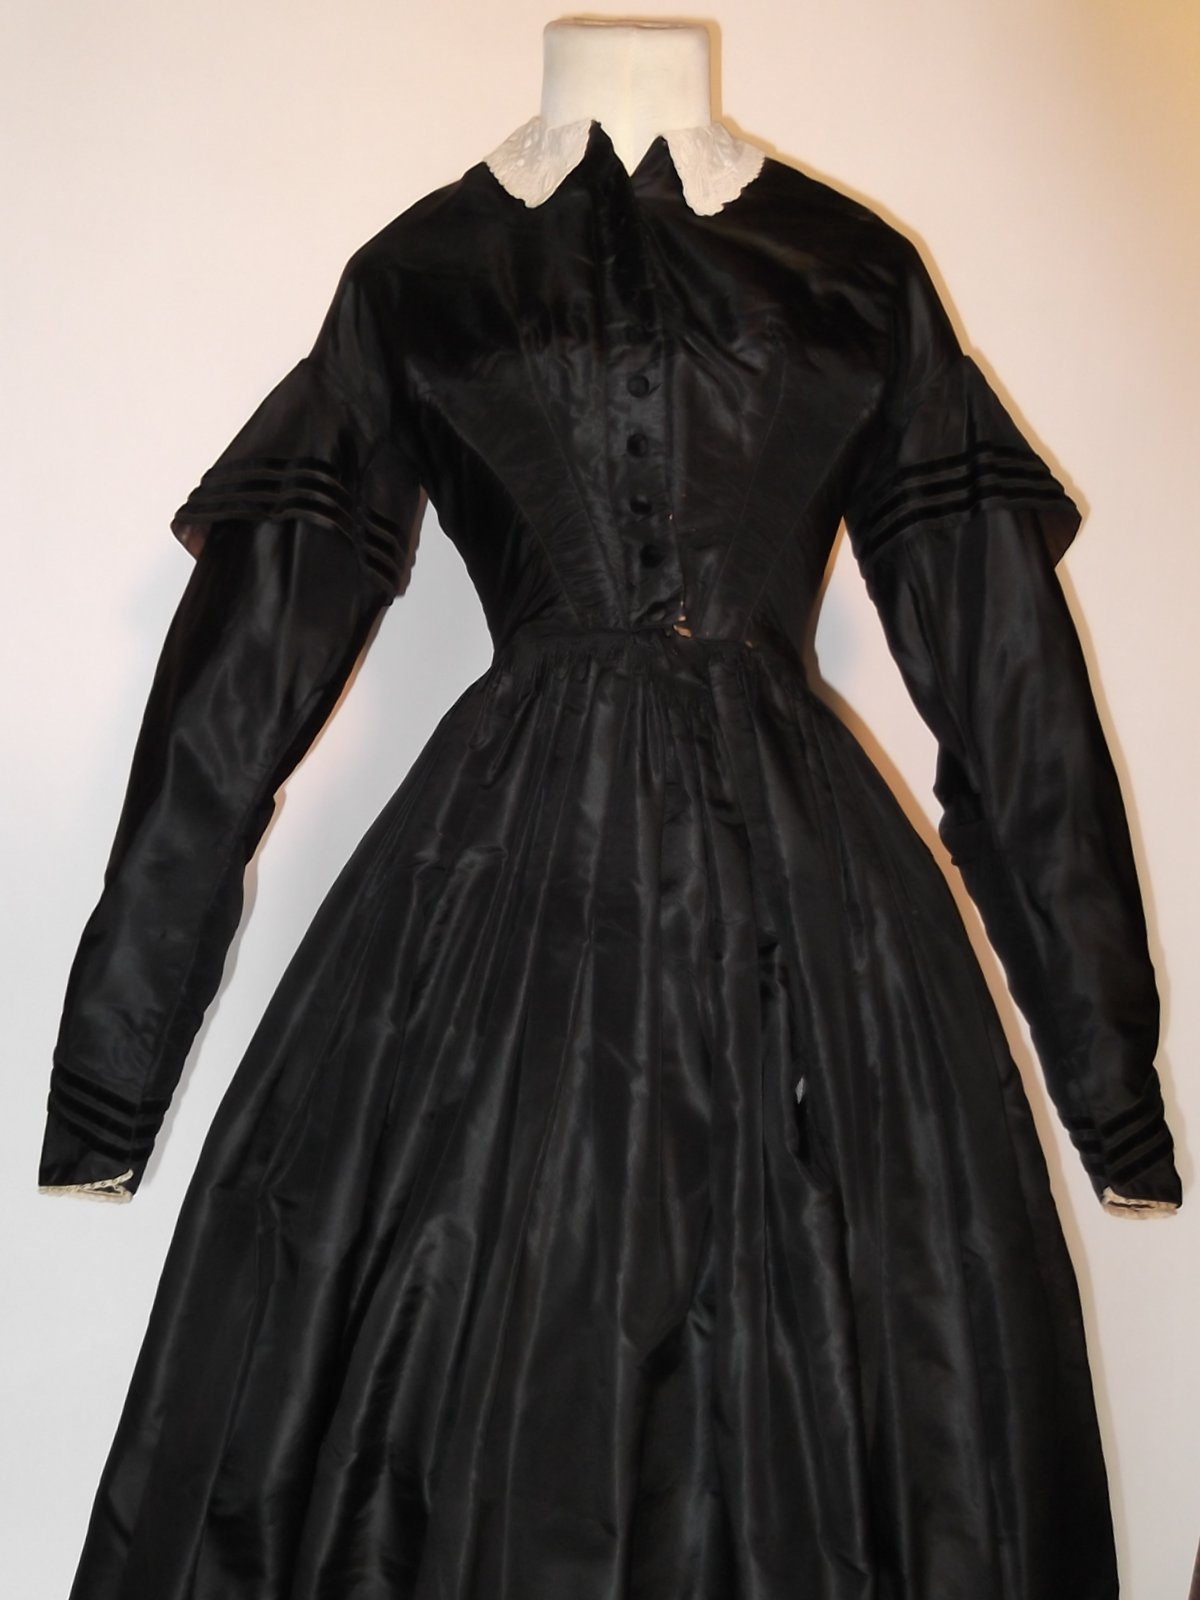 All The Pretty Dresses: American Civil War Era Mourning Dress